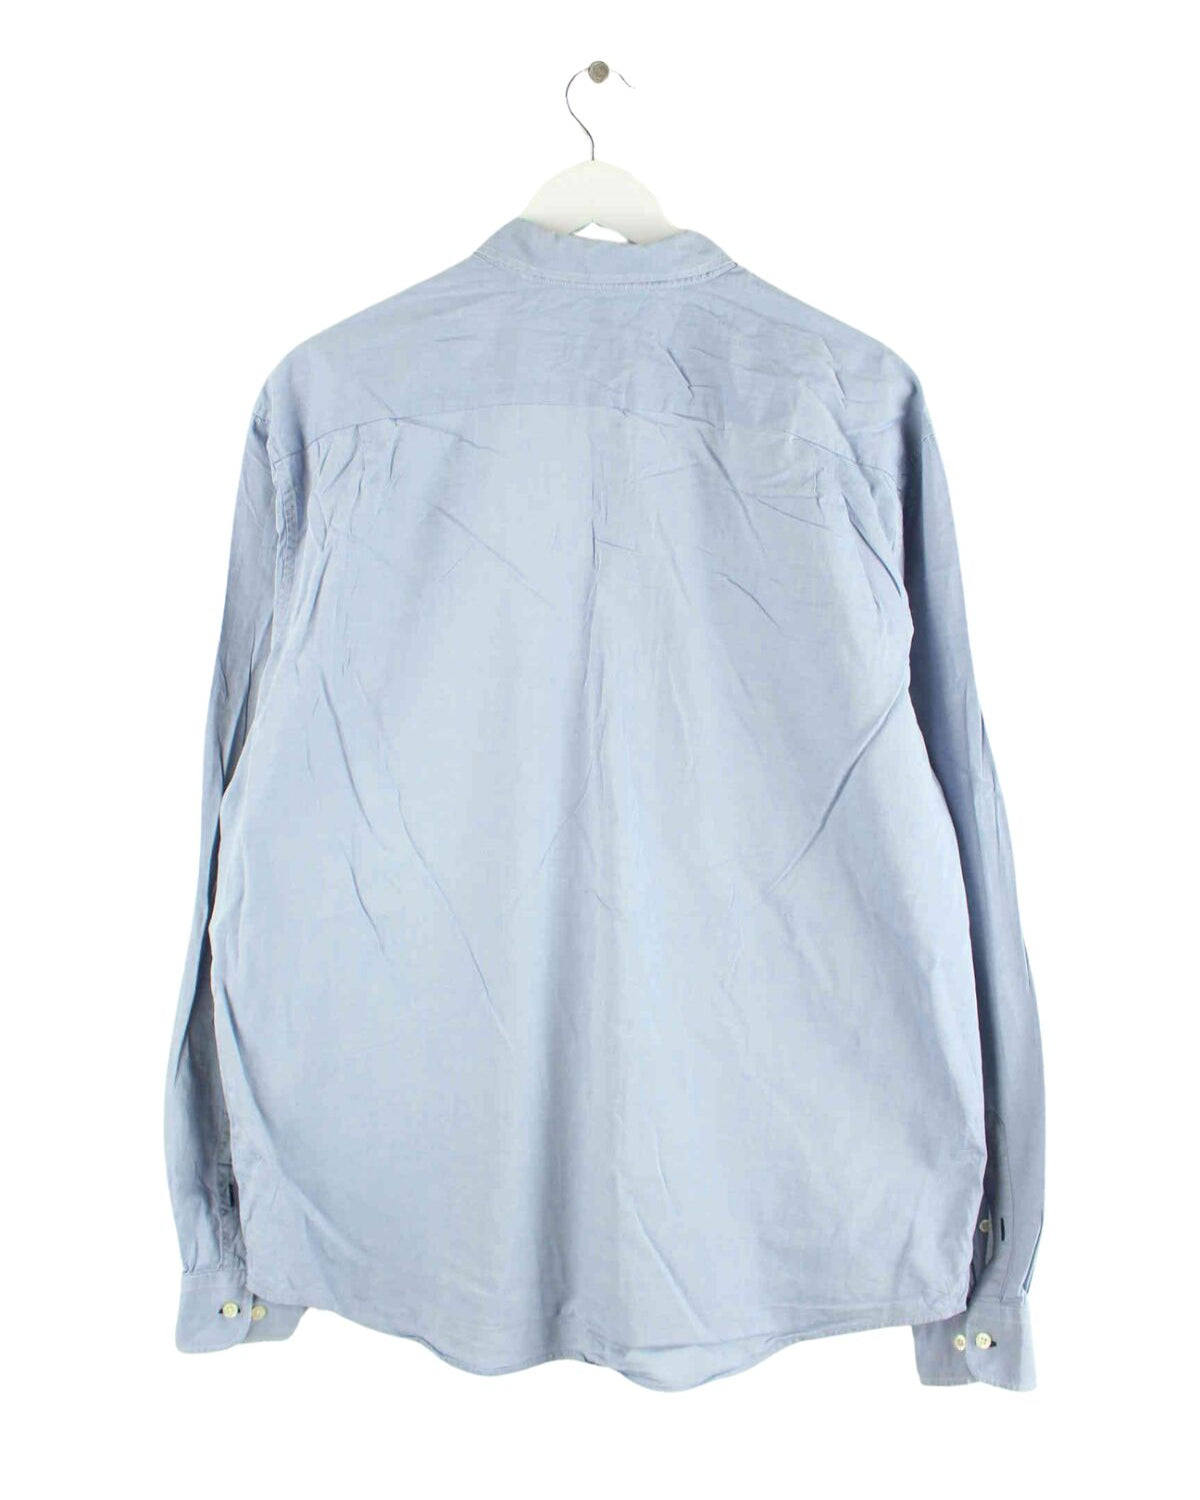 Lacoste Slim Fit Hemd Blau XL (back image)